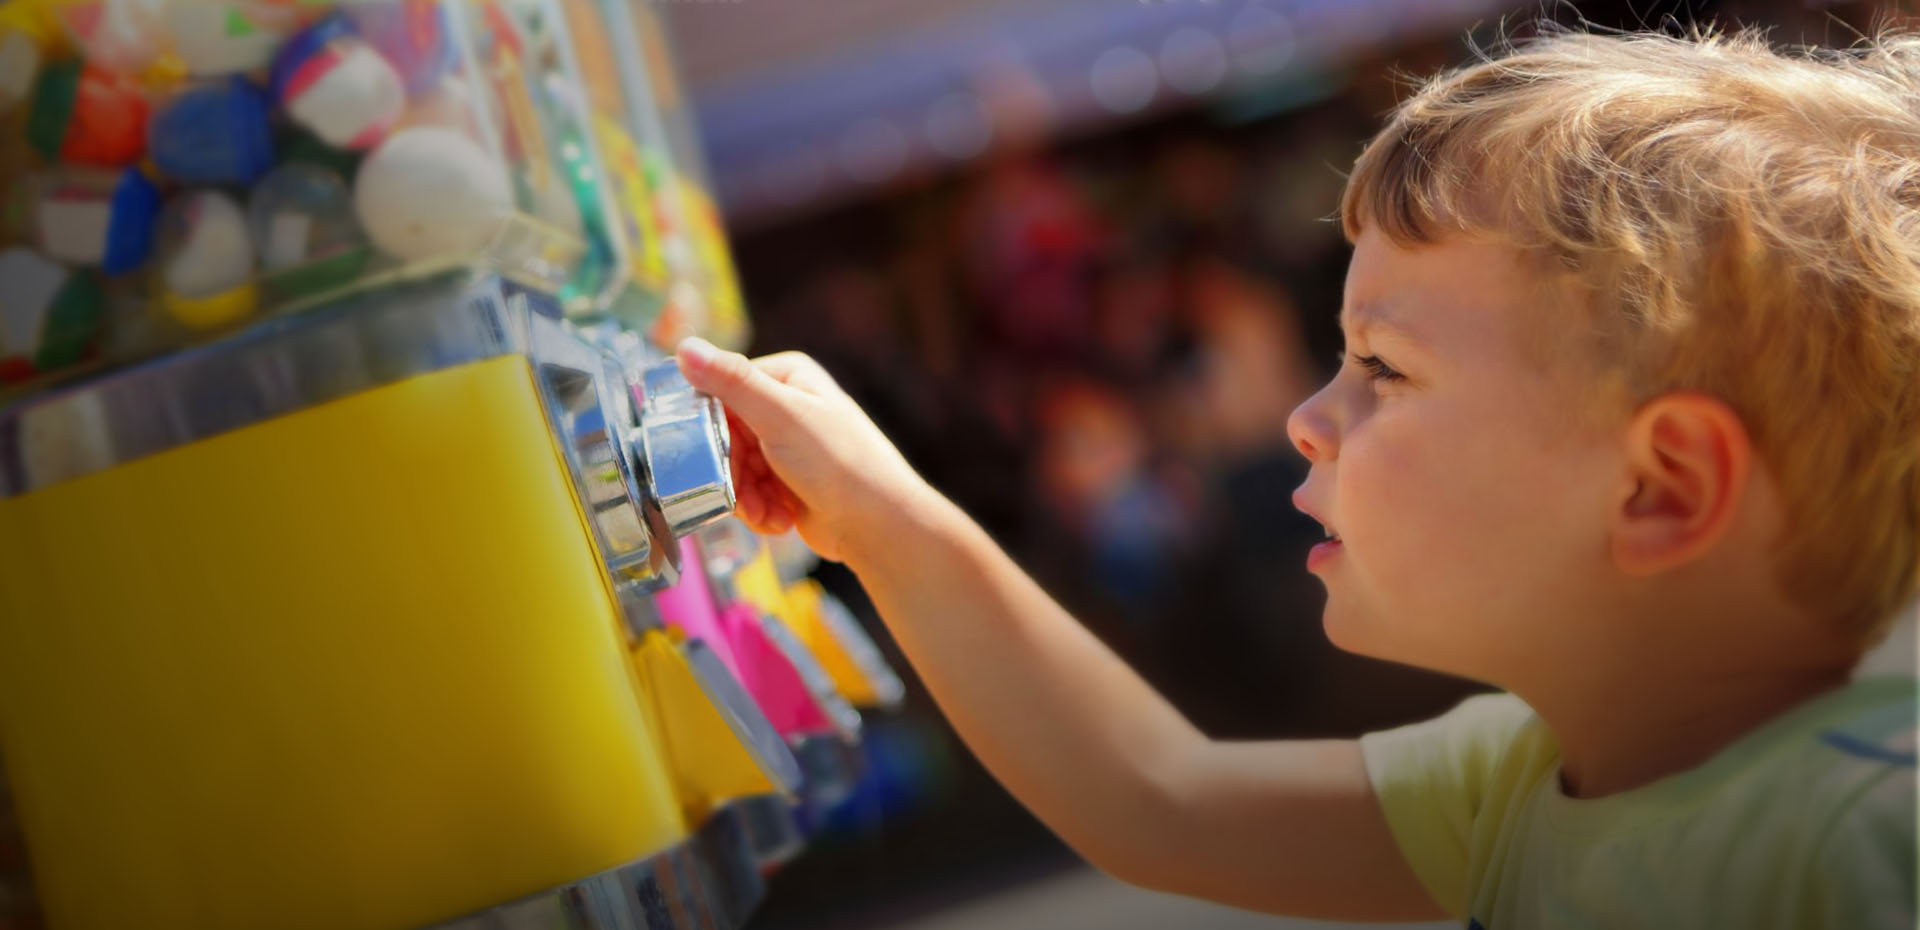 Installers Of Toys Vending Machines For Restaurants Kettering